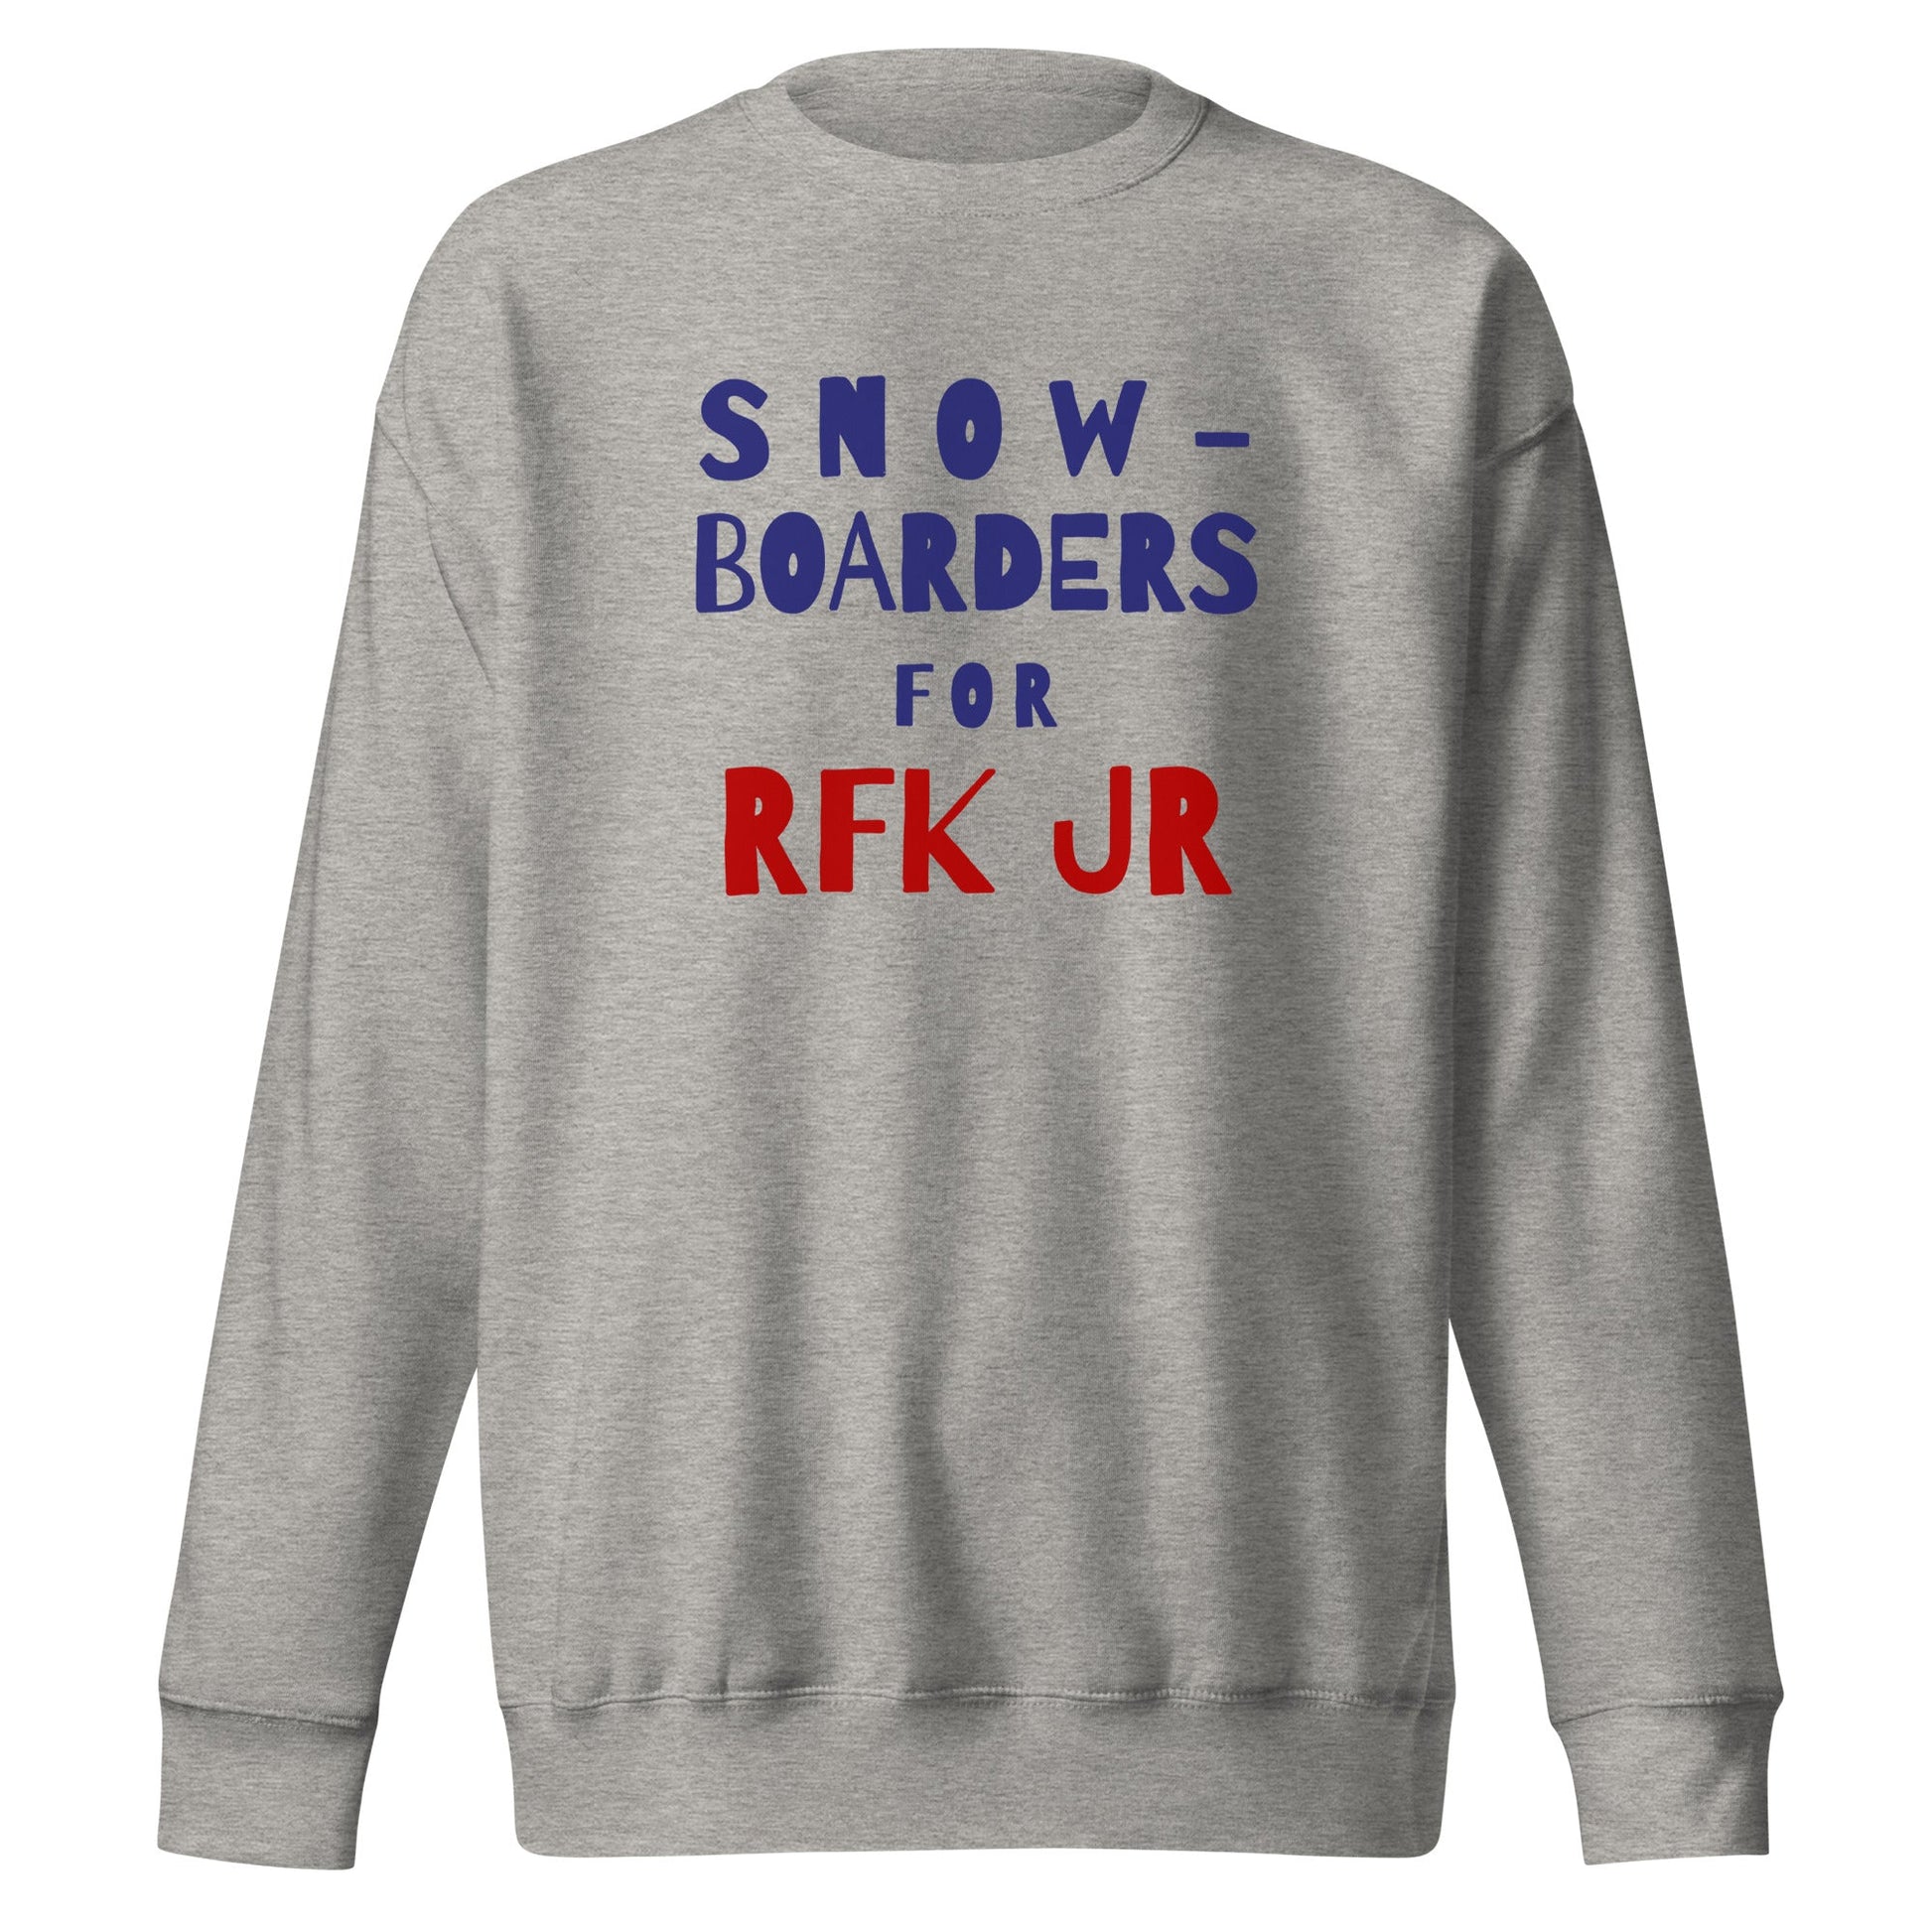 Snowboarders for RFK Jr. Unisex Premium Sweatshirt - TEAM KENNEDY. All rights reserved